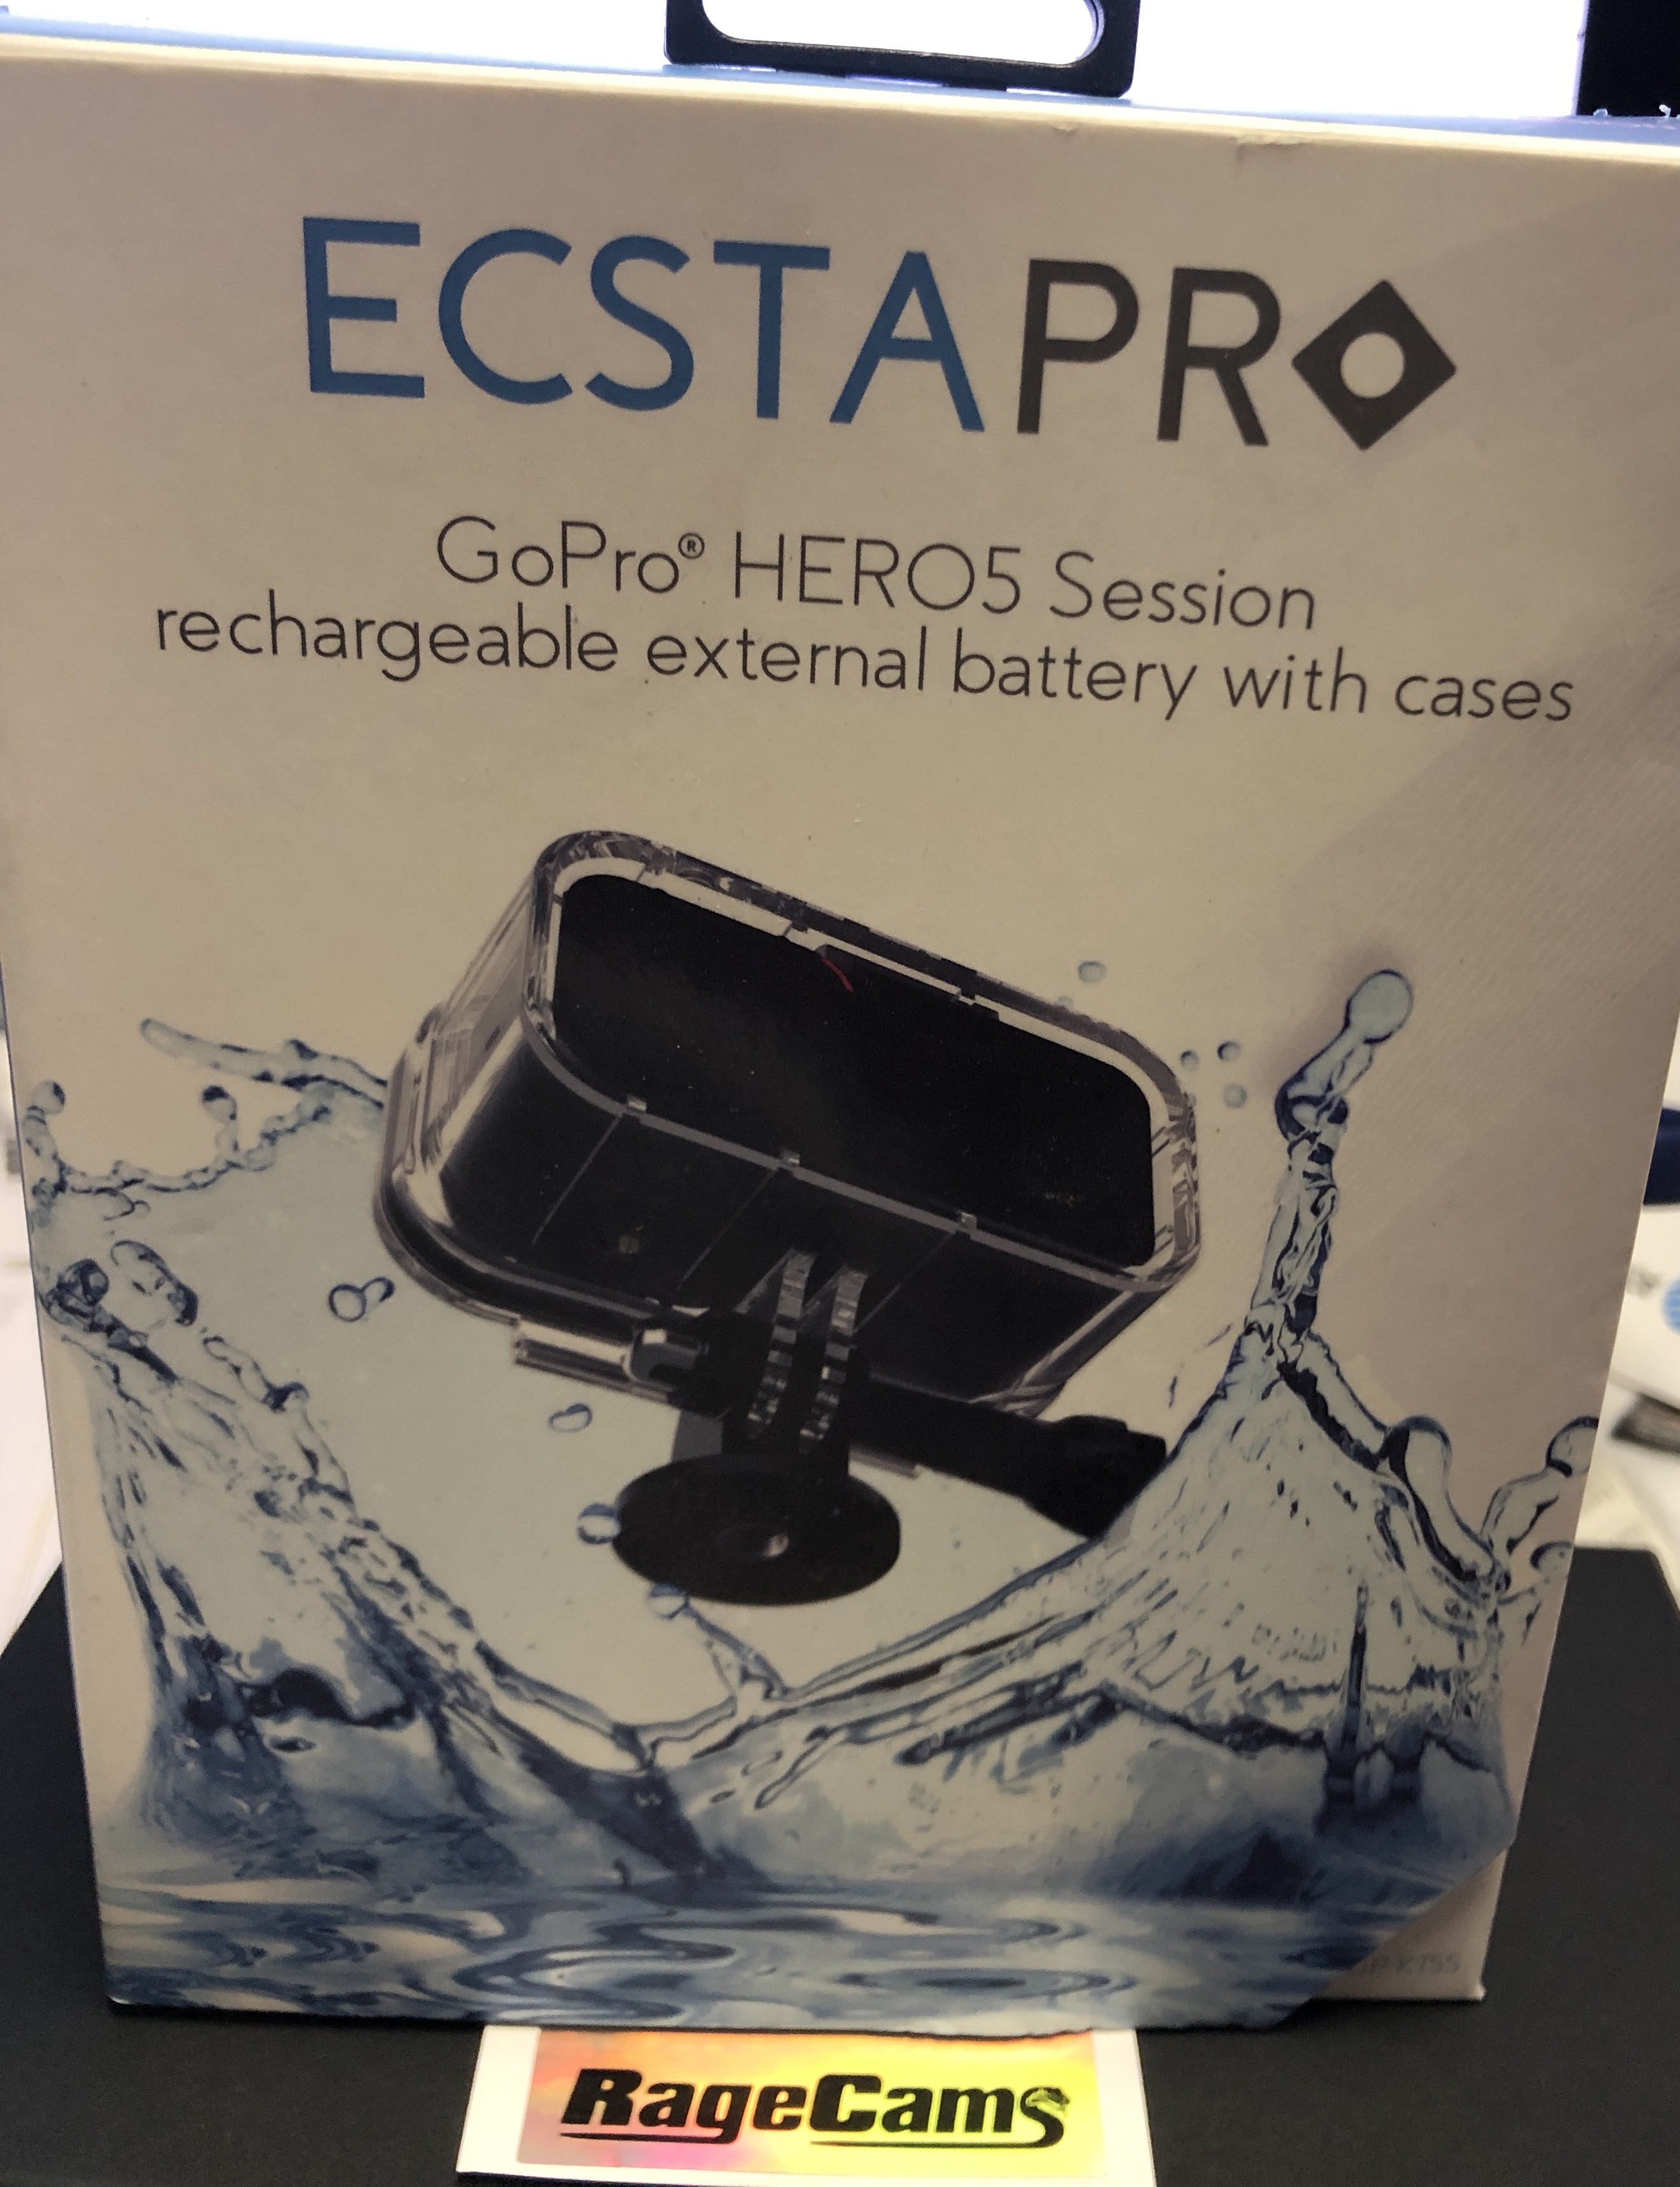 EcstaPro Gopro Hero5 session ext battery cases